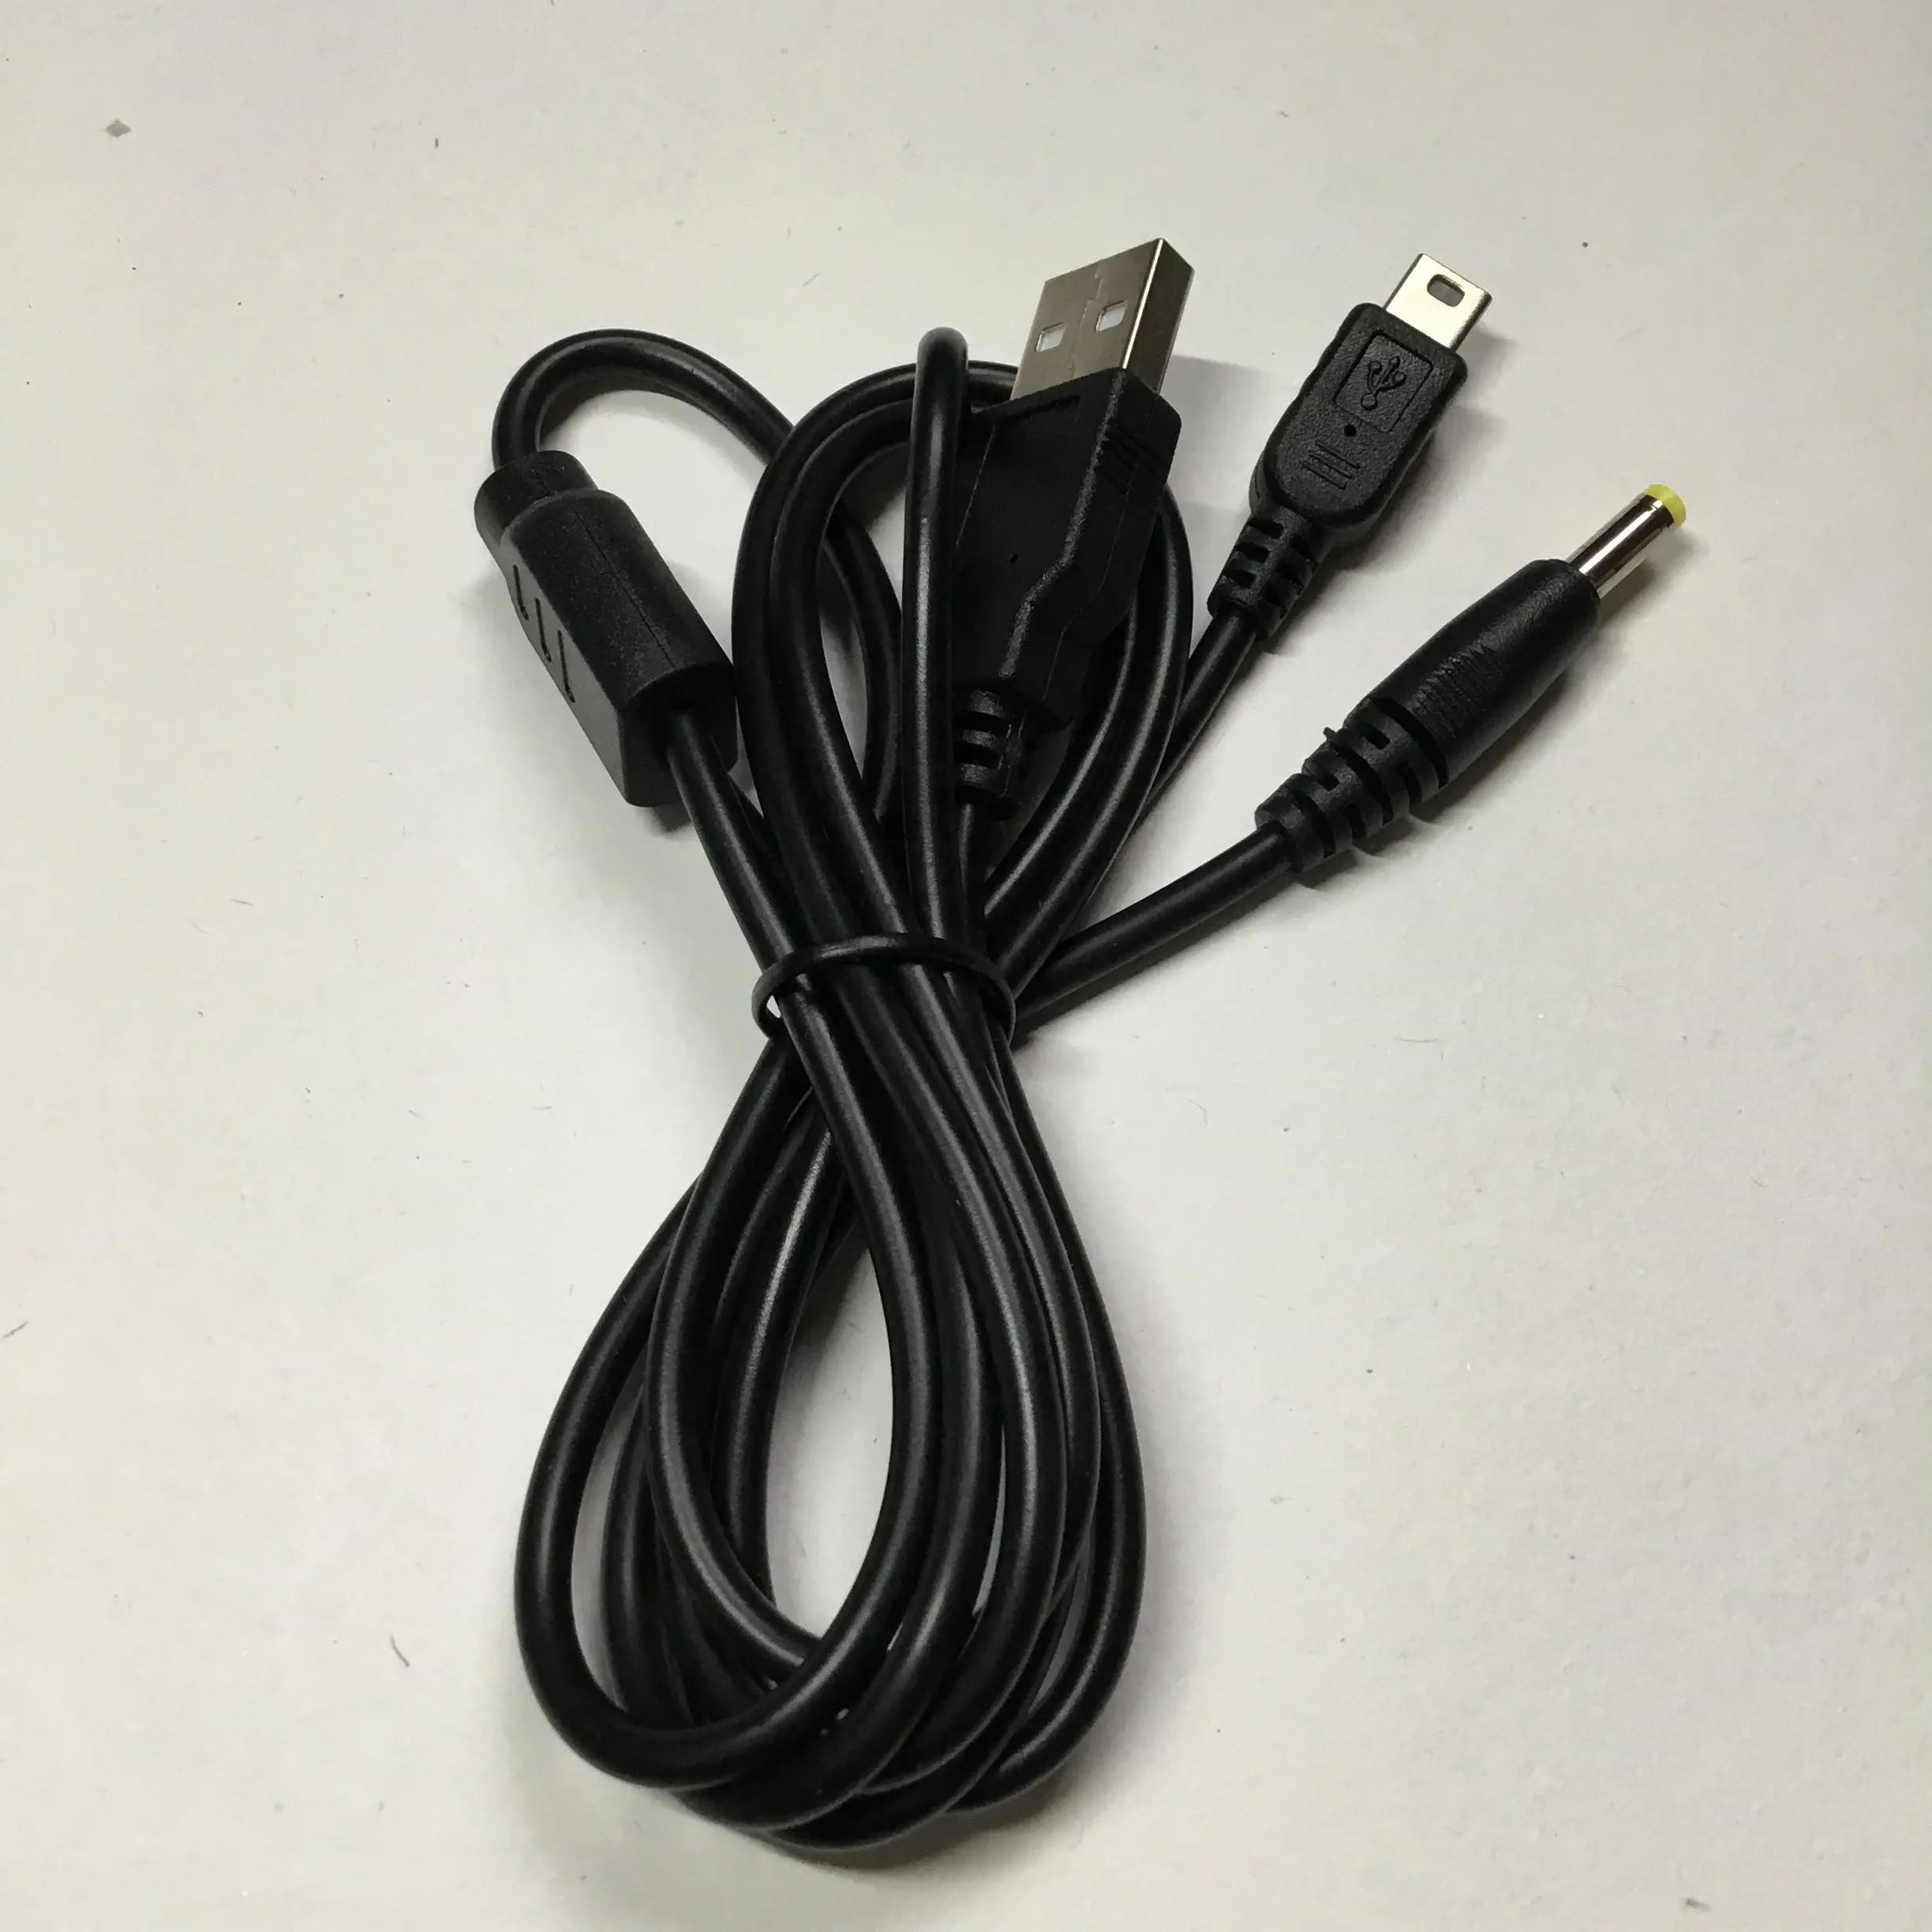 2 In 1 untuk PSP Kabel USB Charger Pengisian Kabel untuk PSP 1000 2000 3000 Data Transfer Kabel 1.2 M